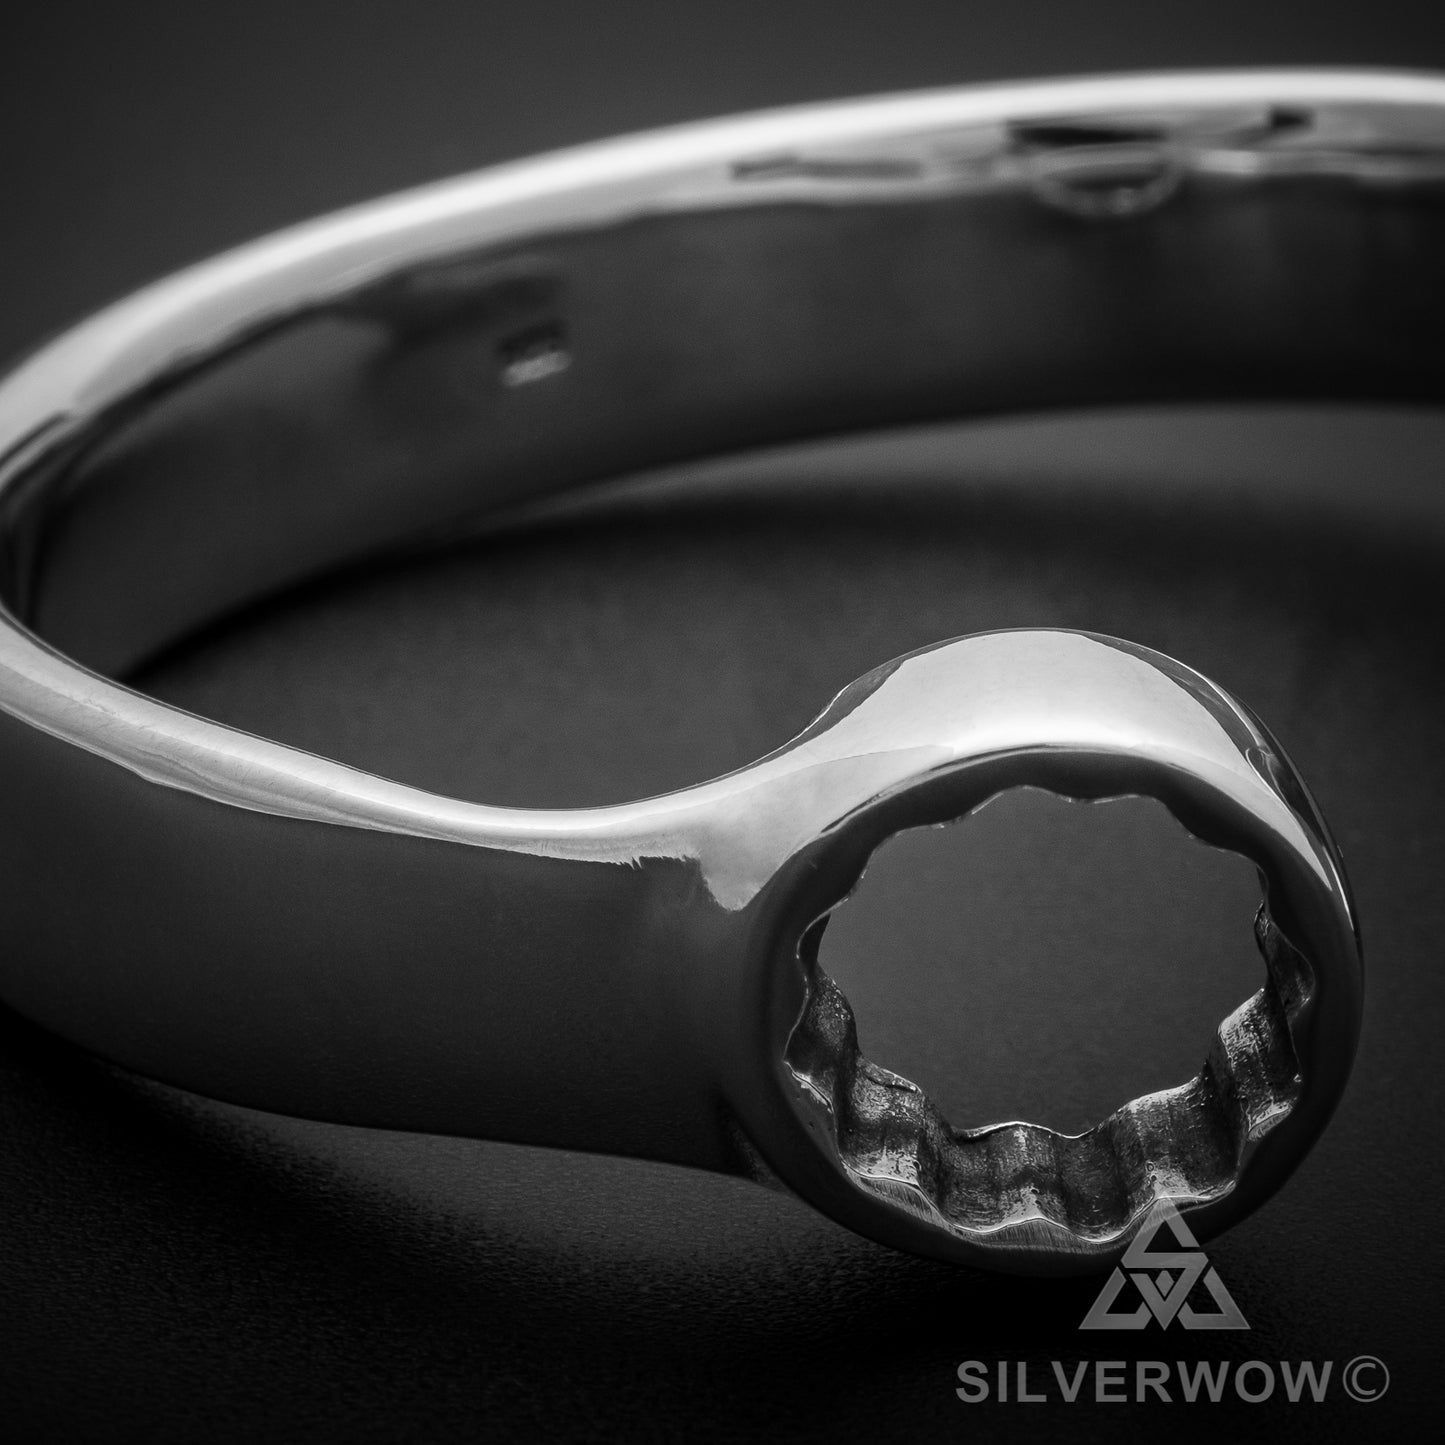 13mm Silver Spanner Wrench Bangle Bracelet